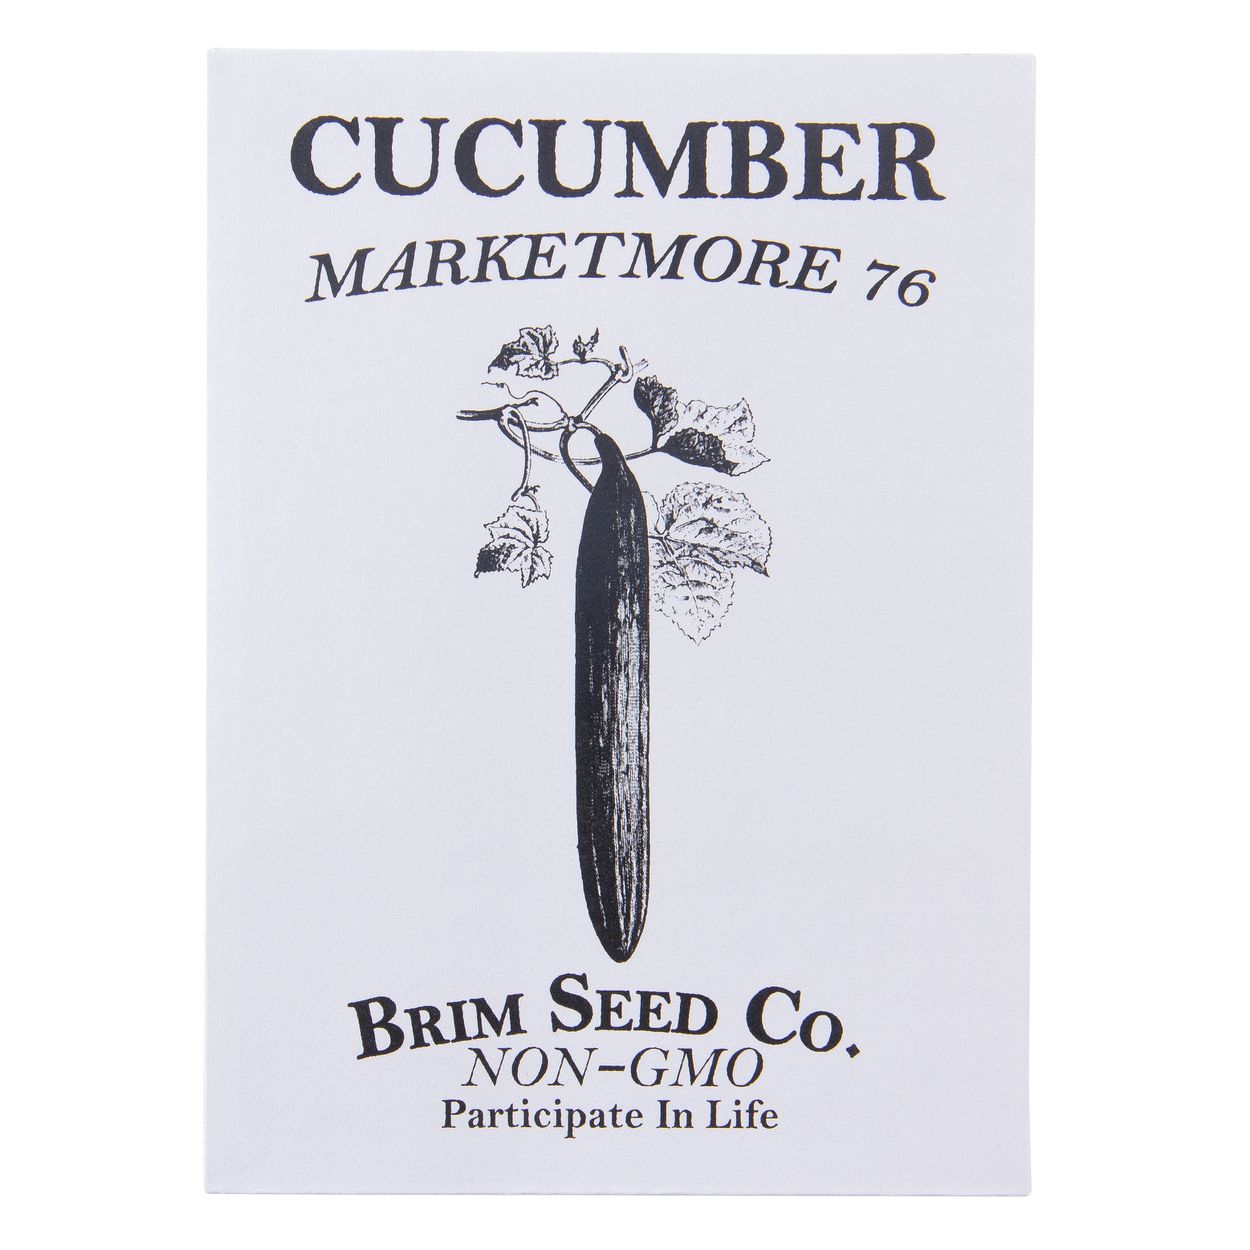 Brim Seed Co. - Marketmore 76 Cucumber Seed